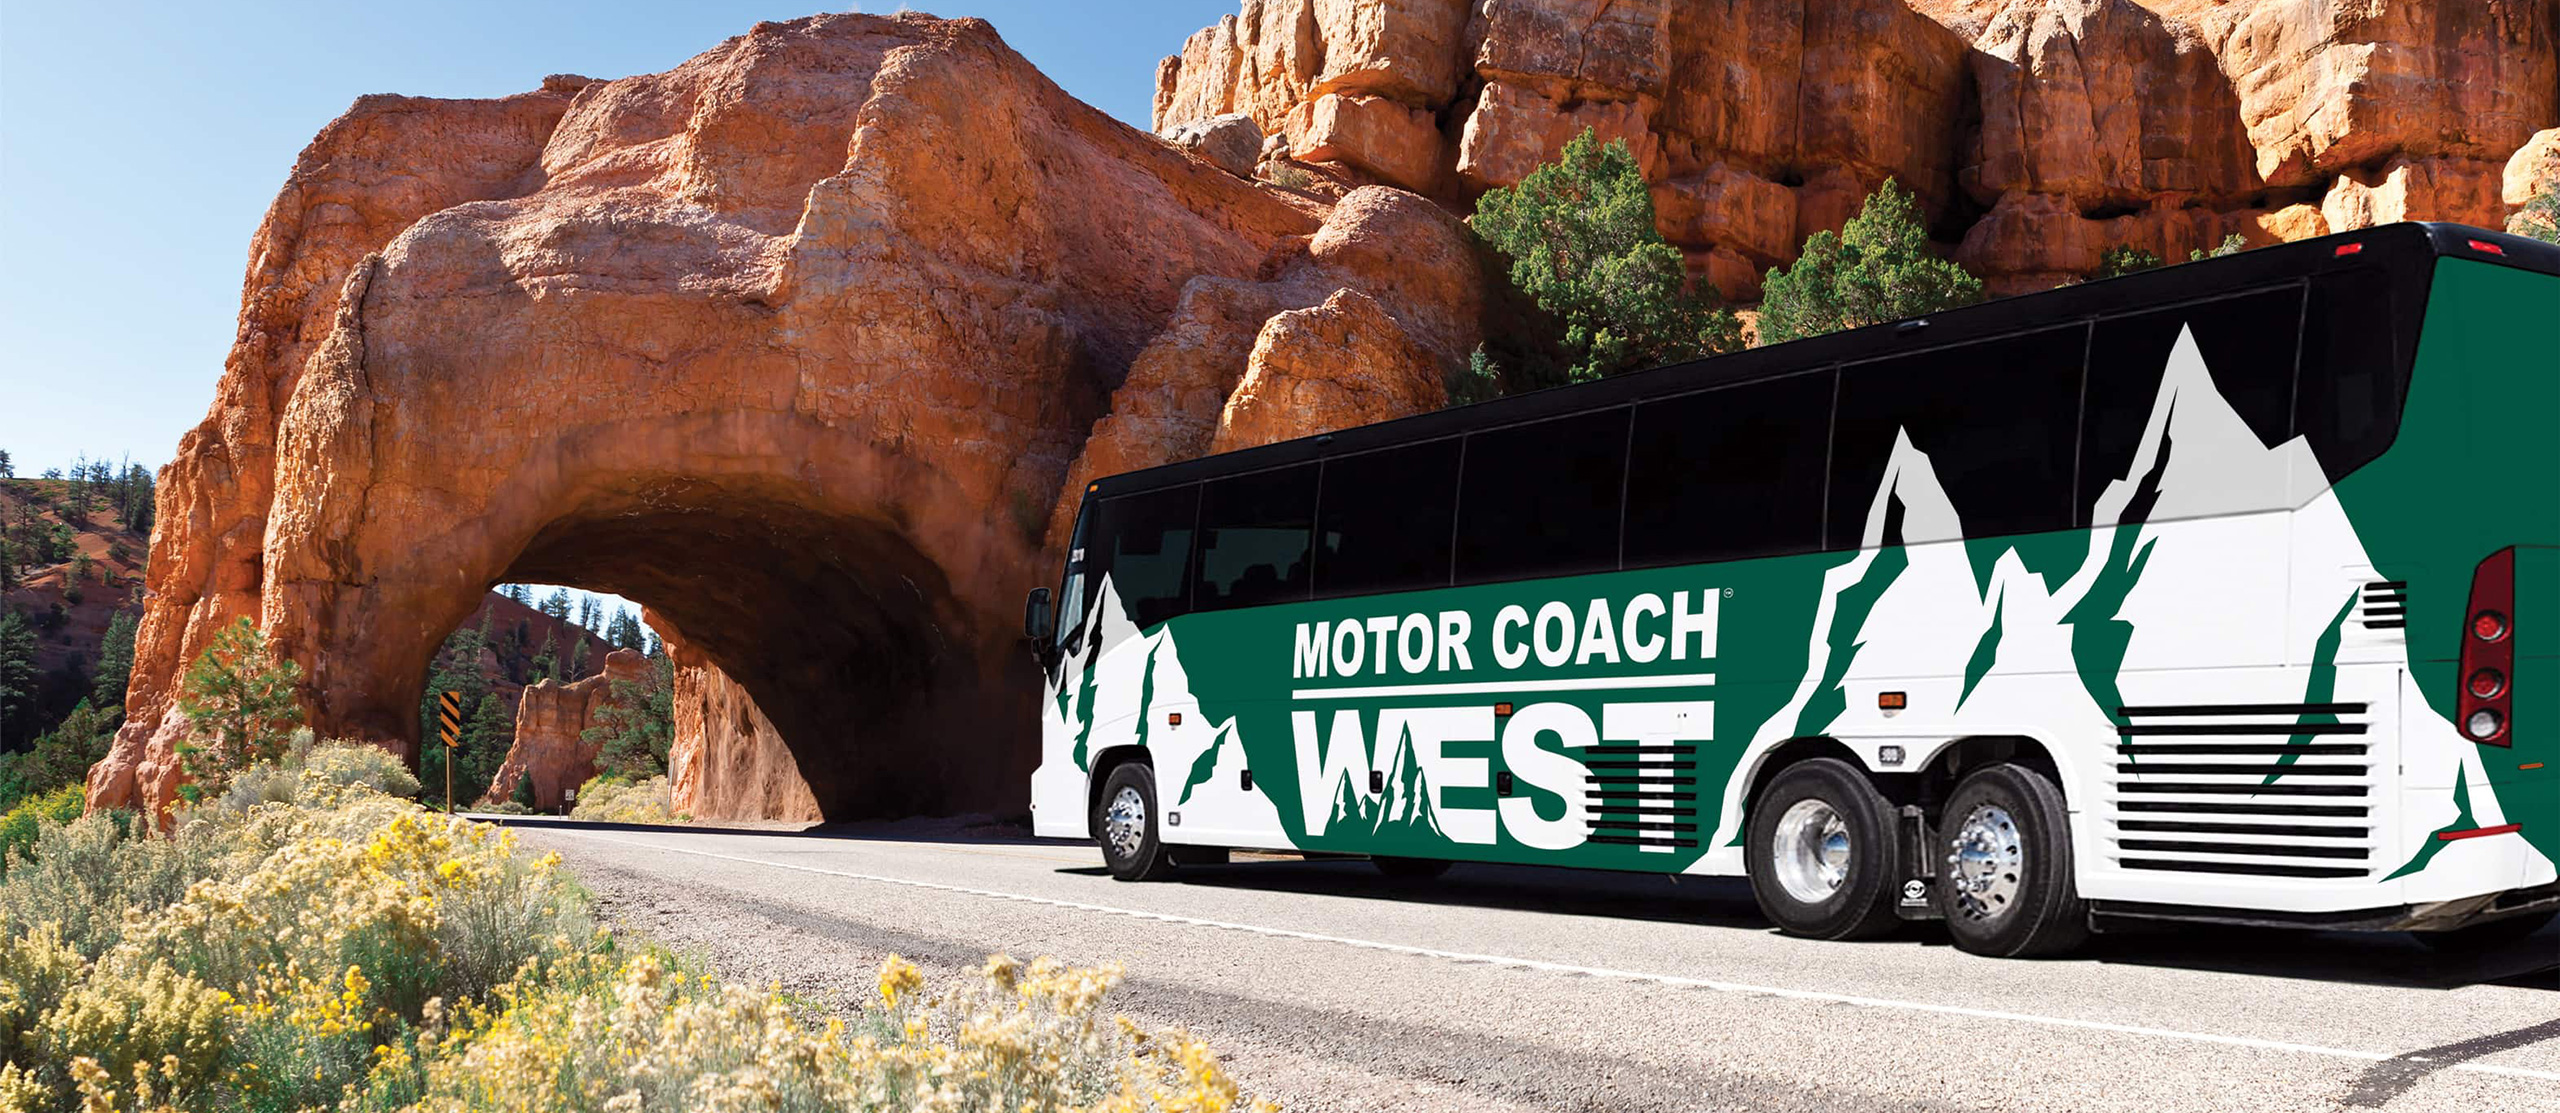 Green Motor Coach West bus entering a rock tunnel.